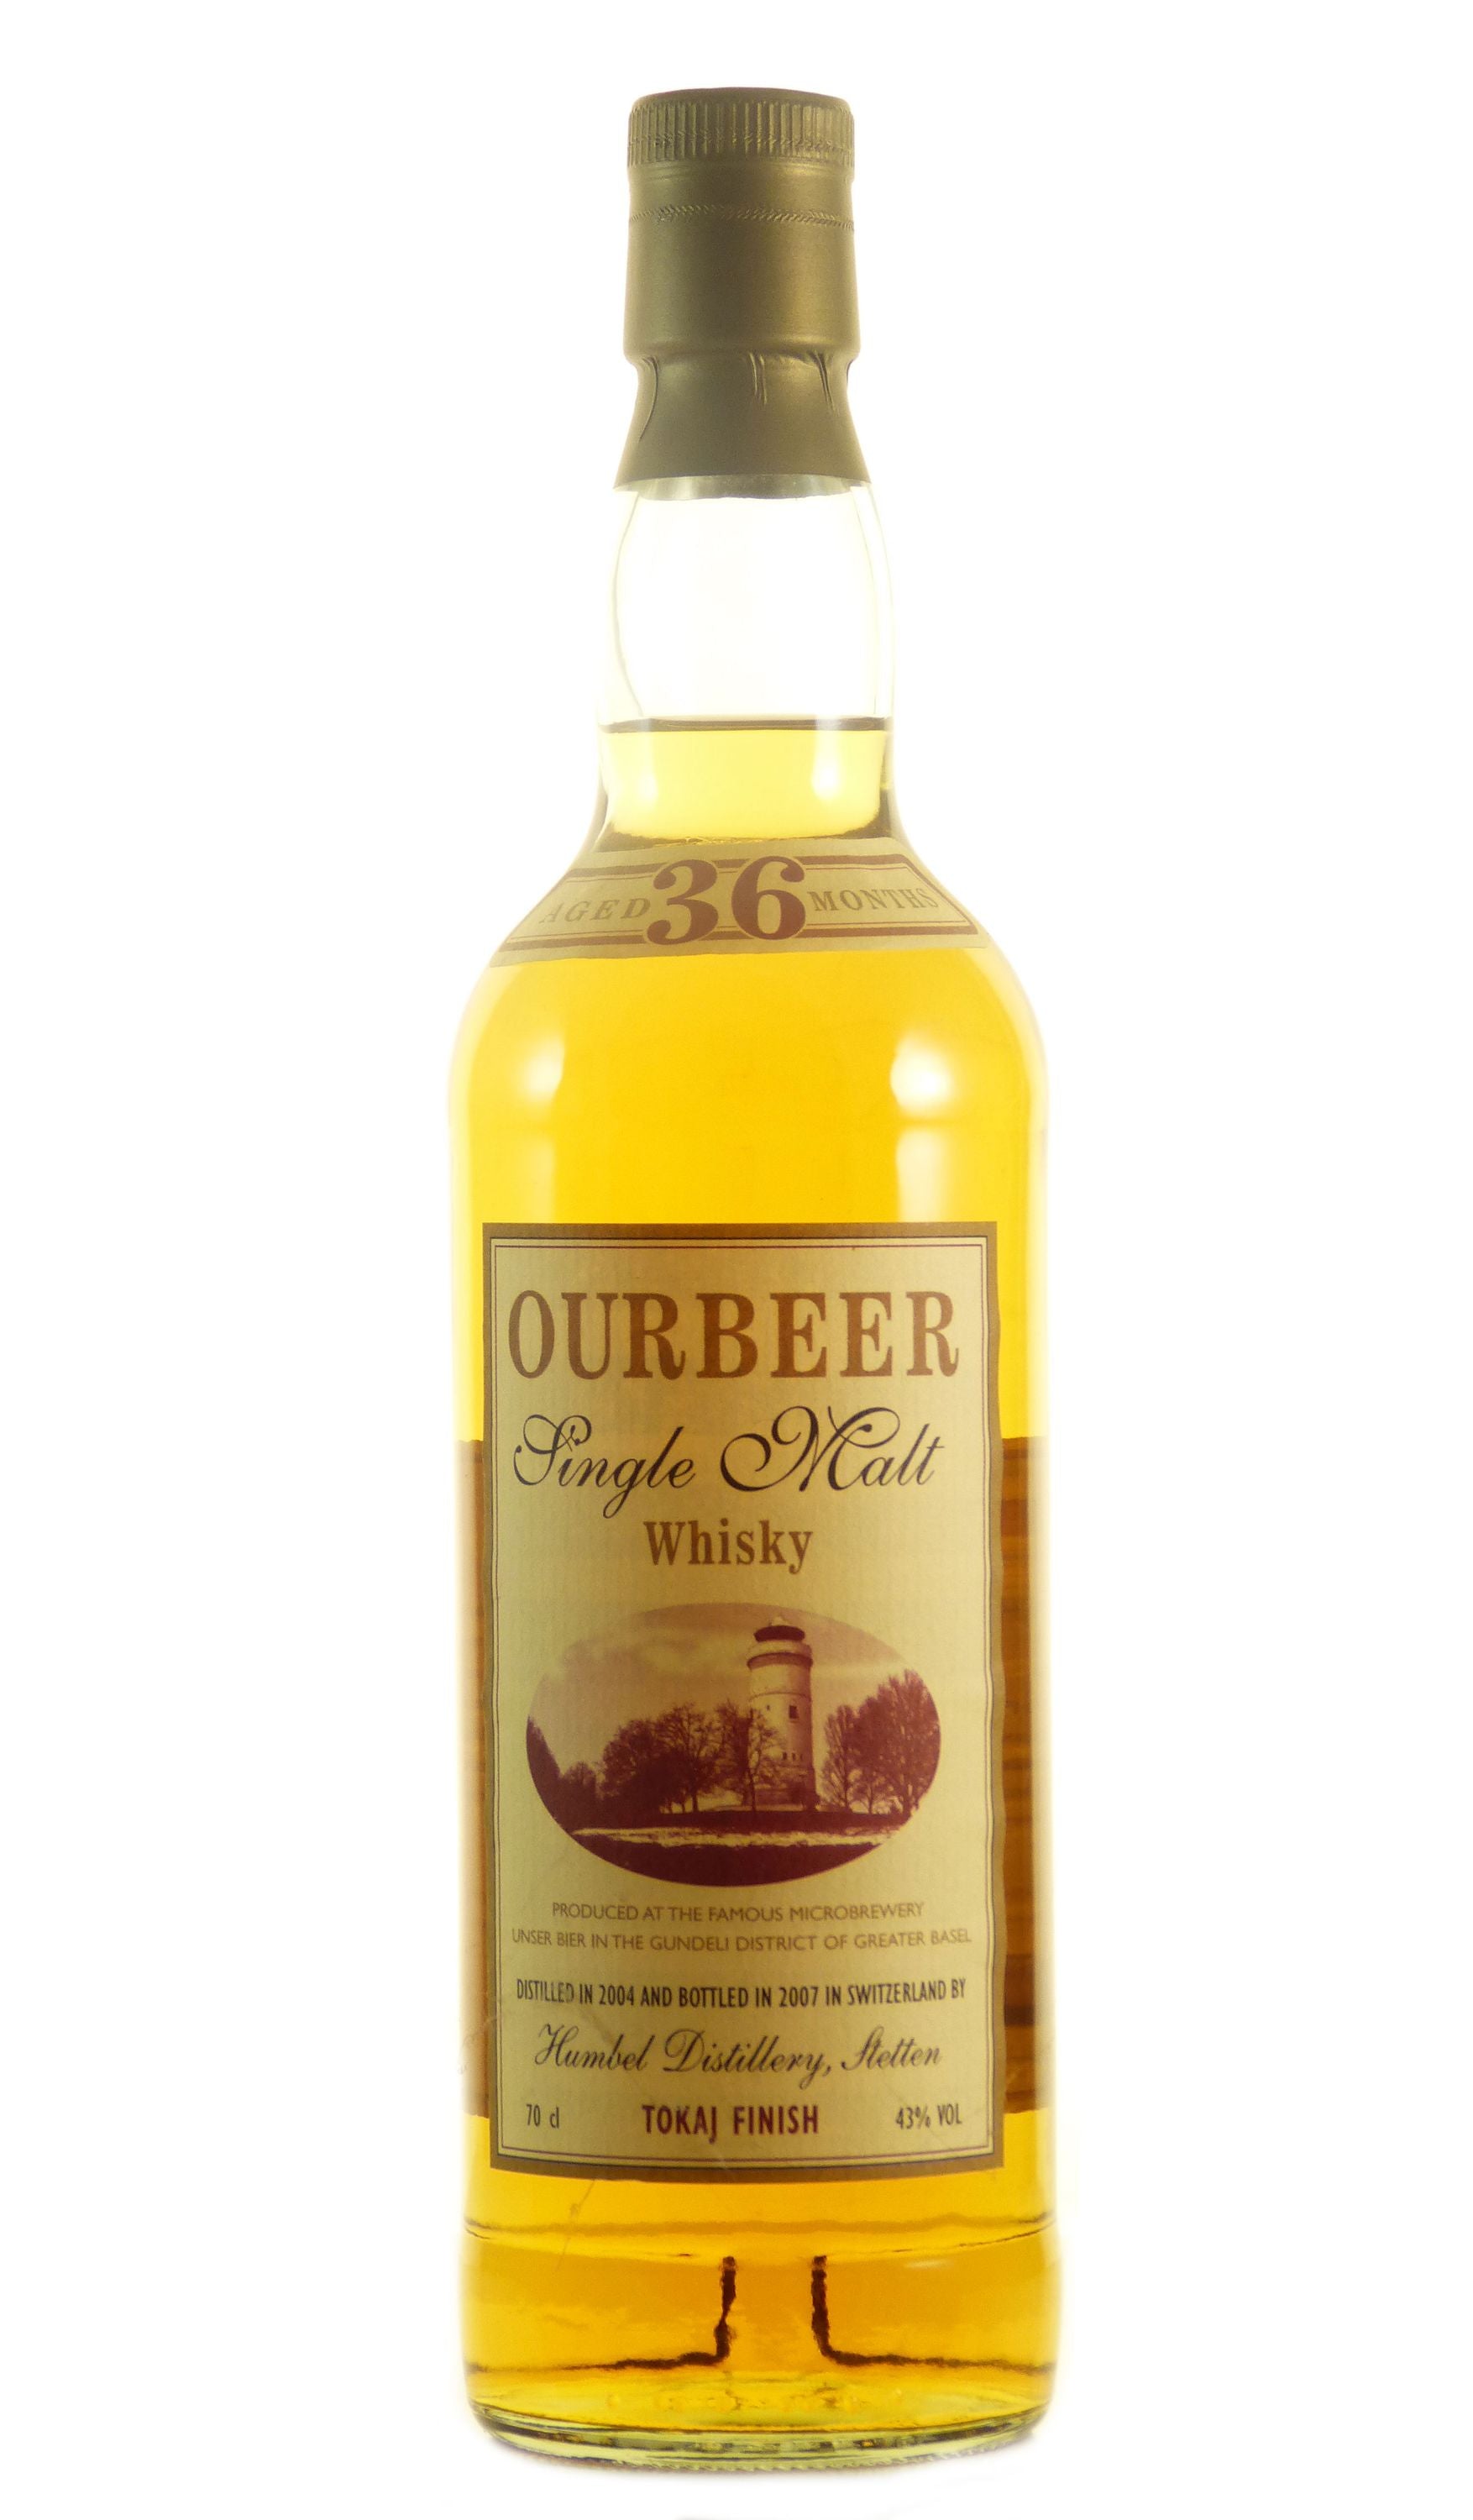 Ourbeer Tokaj Finish Single Malt Whisky, 0.7l, alc. 43% by volume